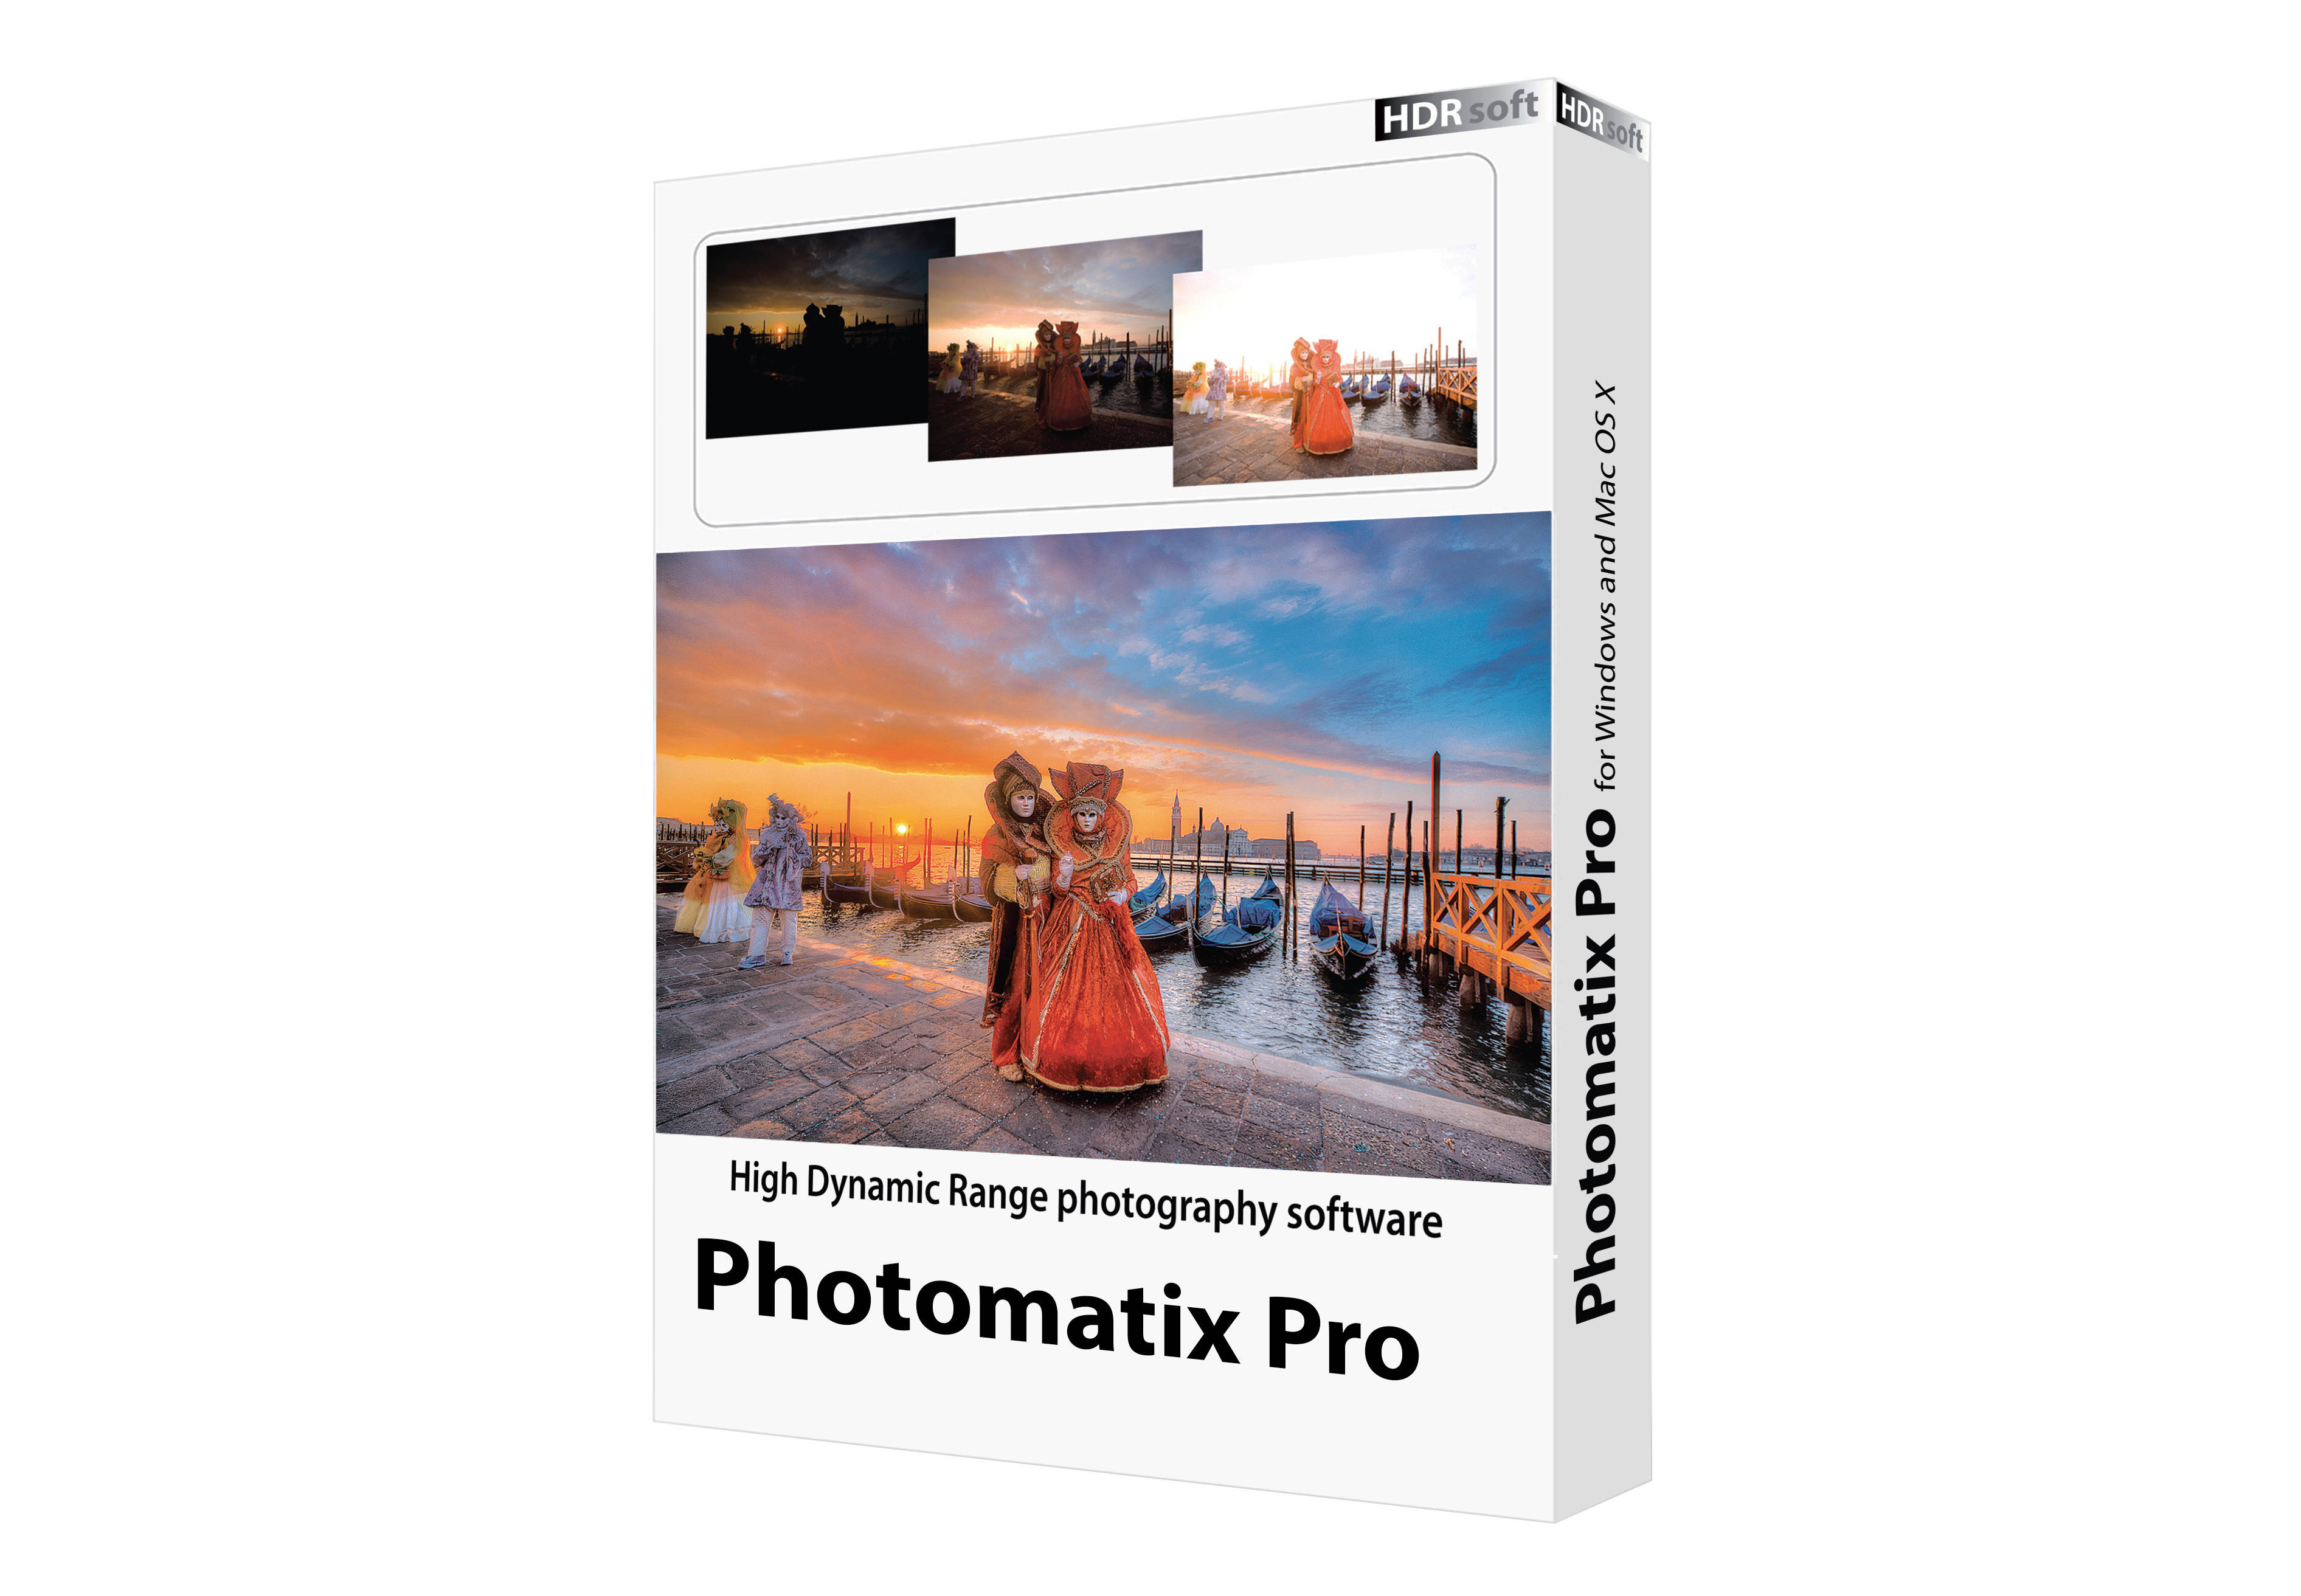 [$ 6.77] HDR Photomatix Pro 7 CD Key